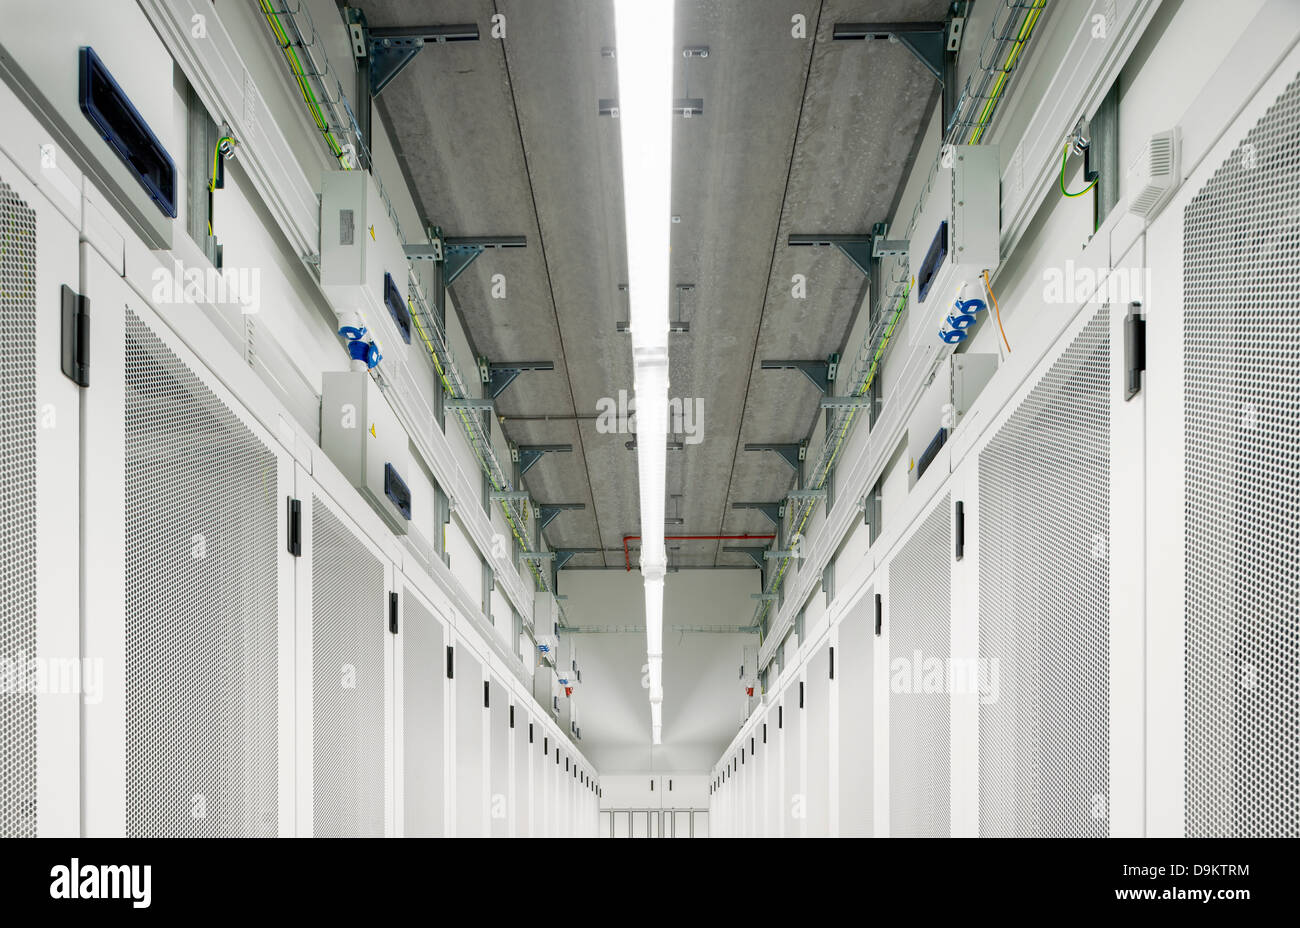 Diminishing perspective of data storage warehouse Stock Photo